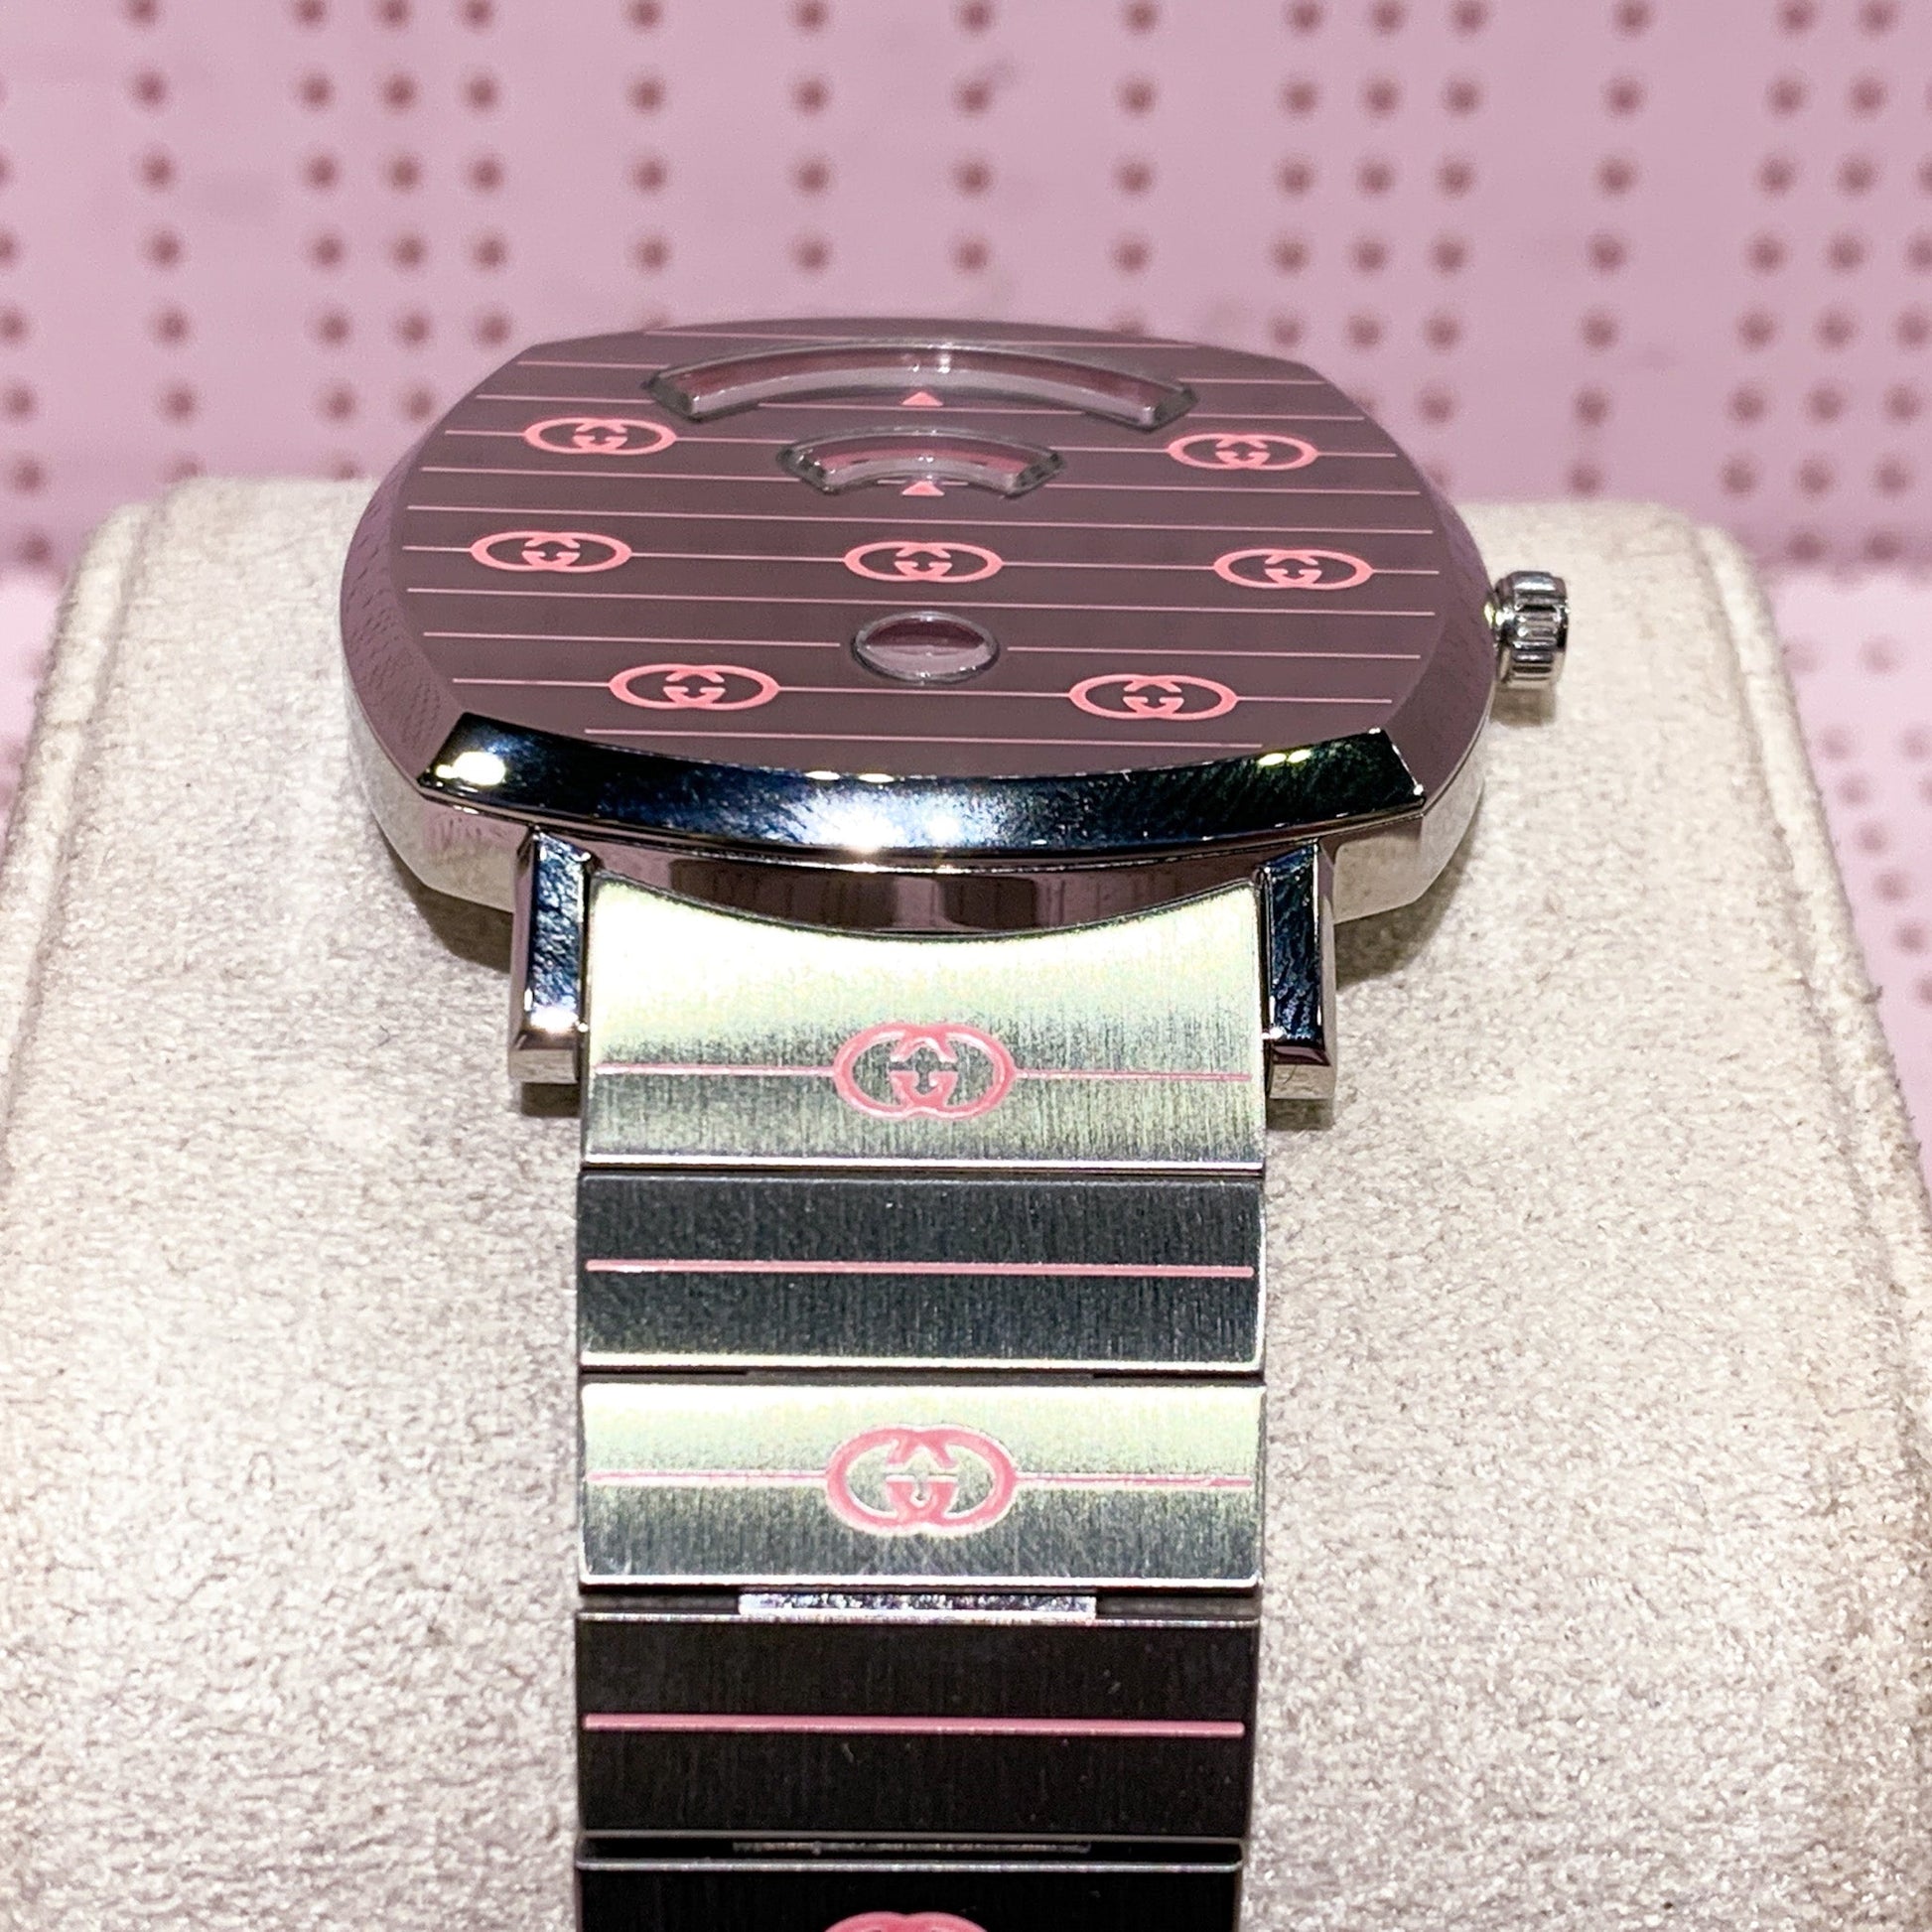 Gucci Grip Quartz Silver Dial Silver Steel Strap Watch For Women - YA157438